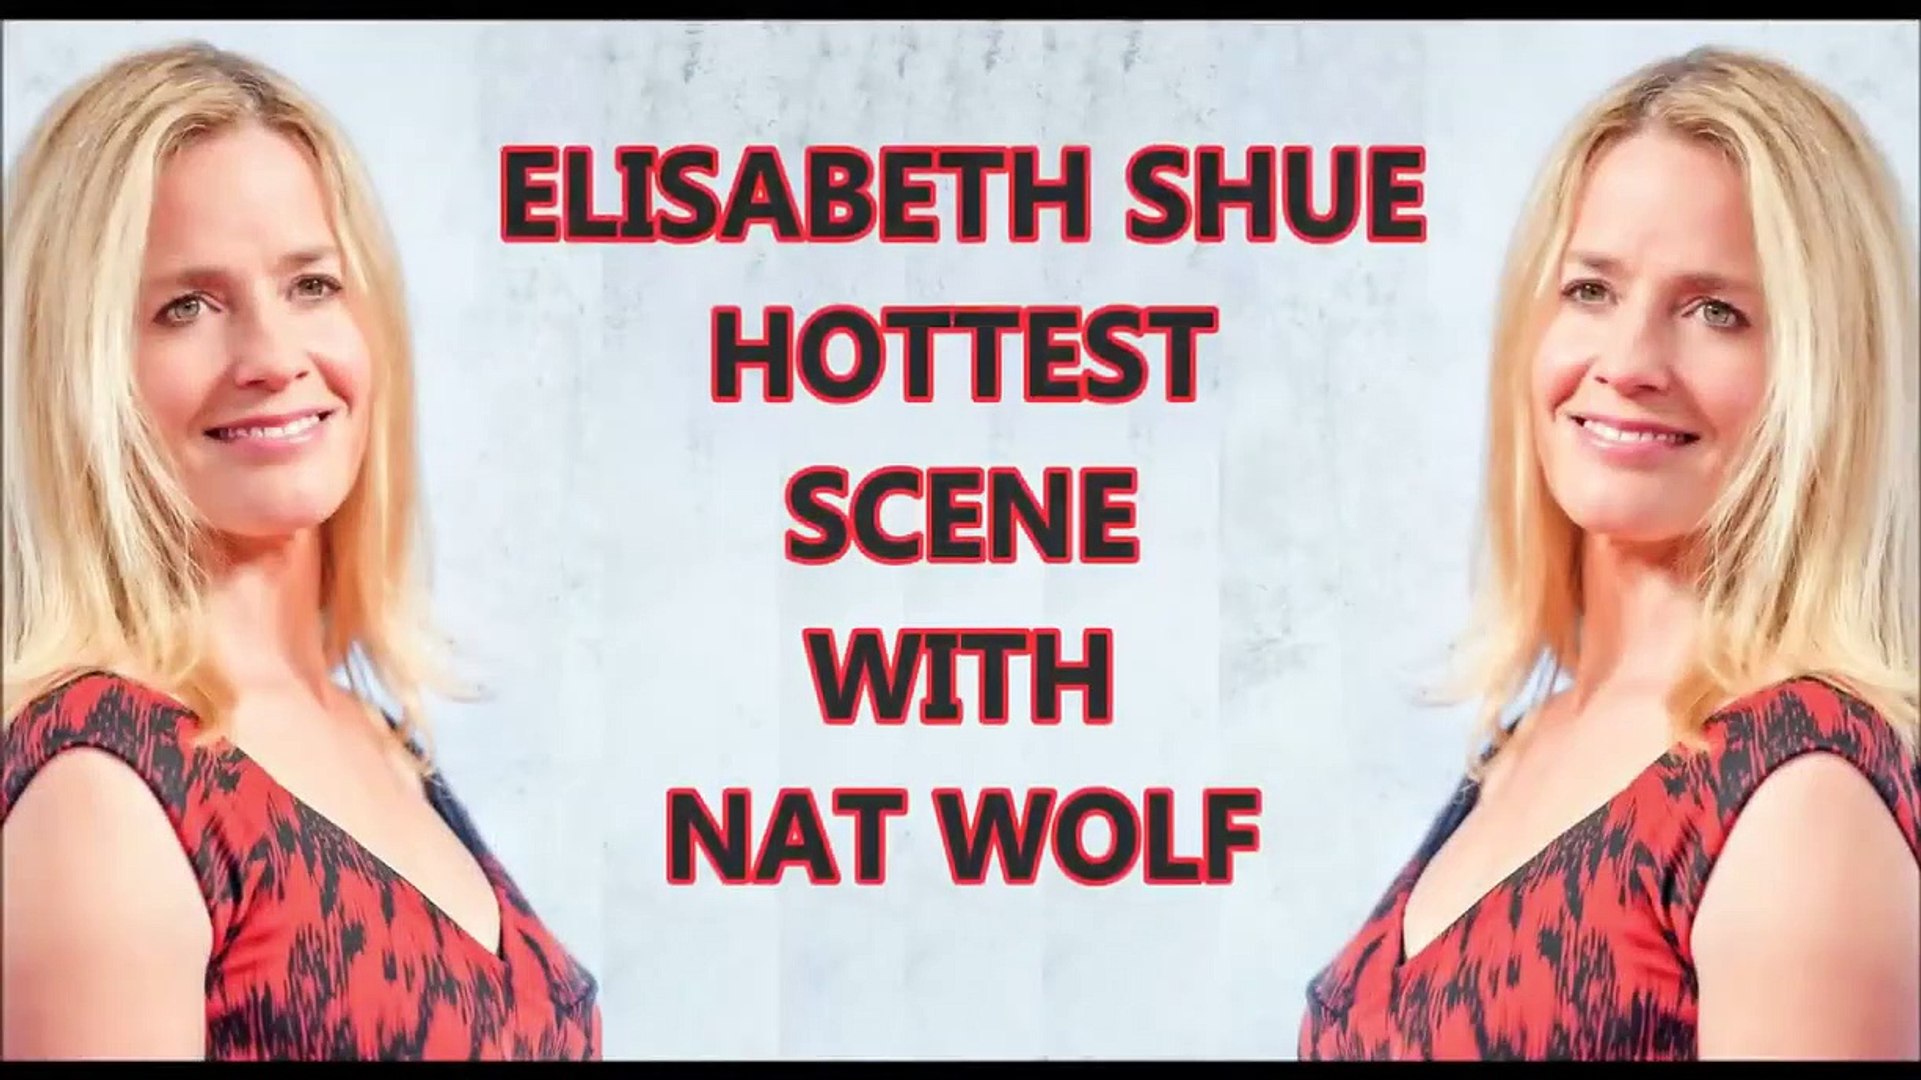 Hot elisabeth pics shue Elisabeth Shue